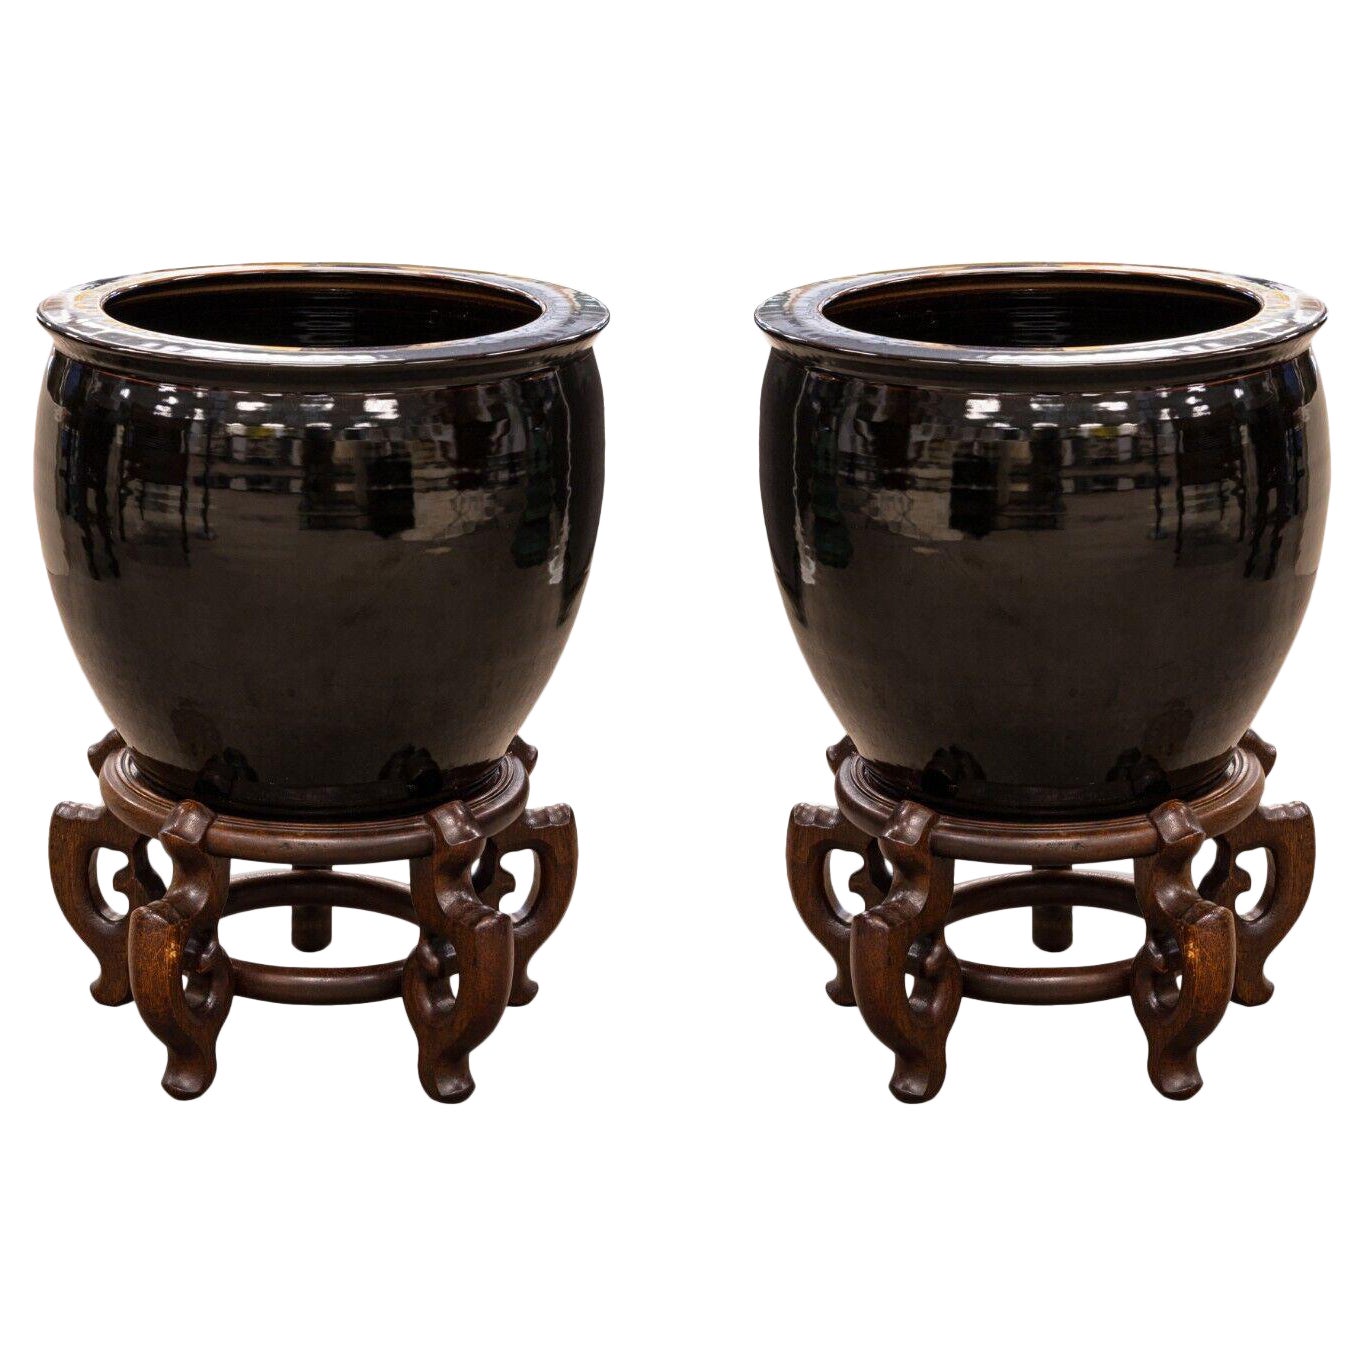 Pair of Modern Asian Urn Floor Ceramic Vases Black Glaze on Ornate Wooden Stands For Sale